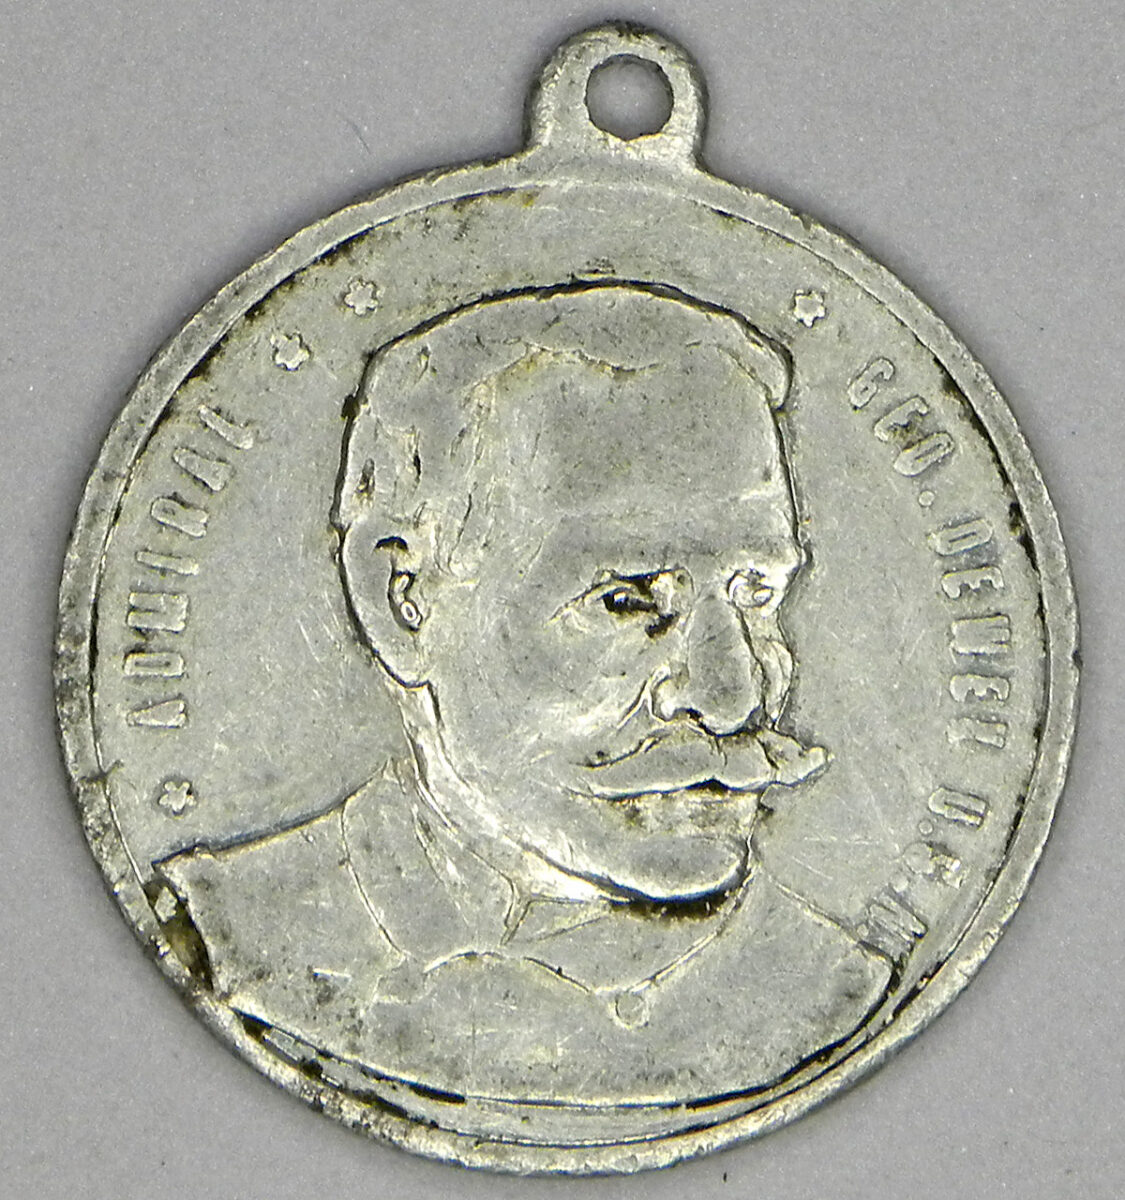 Admiral Dewey medal (obverse)